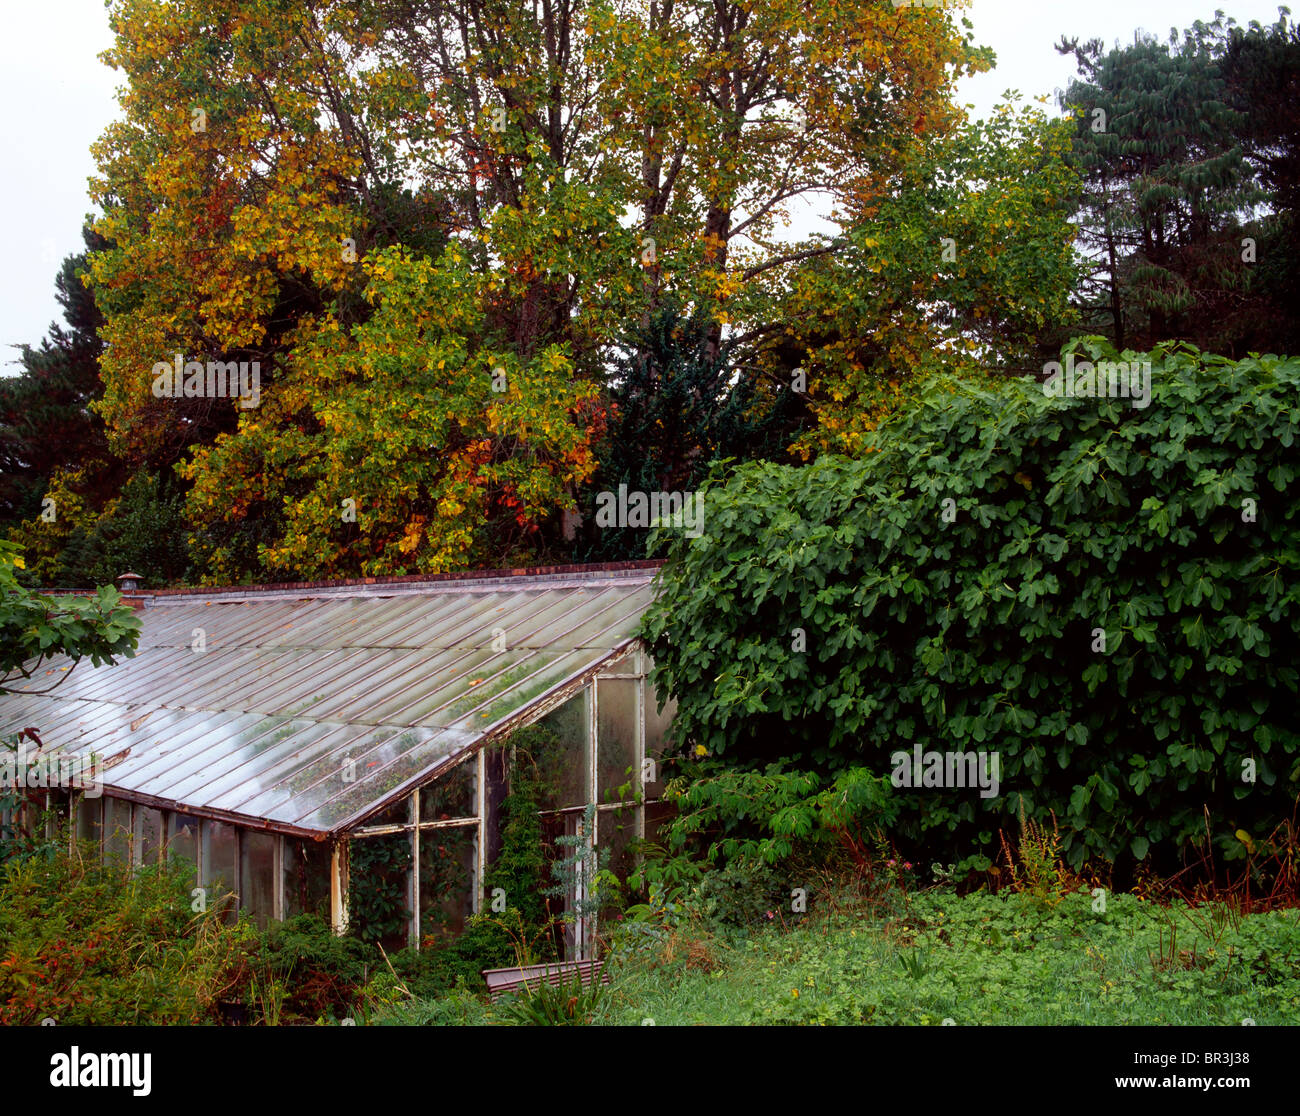 Ilnacullin Gardens, Co Cork, Ireland, Overgrown Greenhouses In Walled Garden Stock Photo